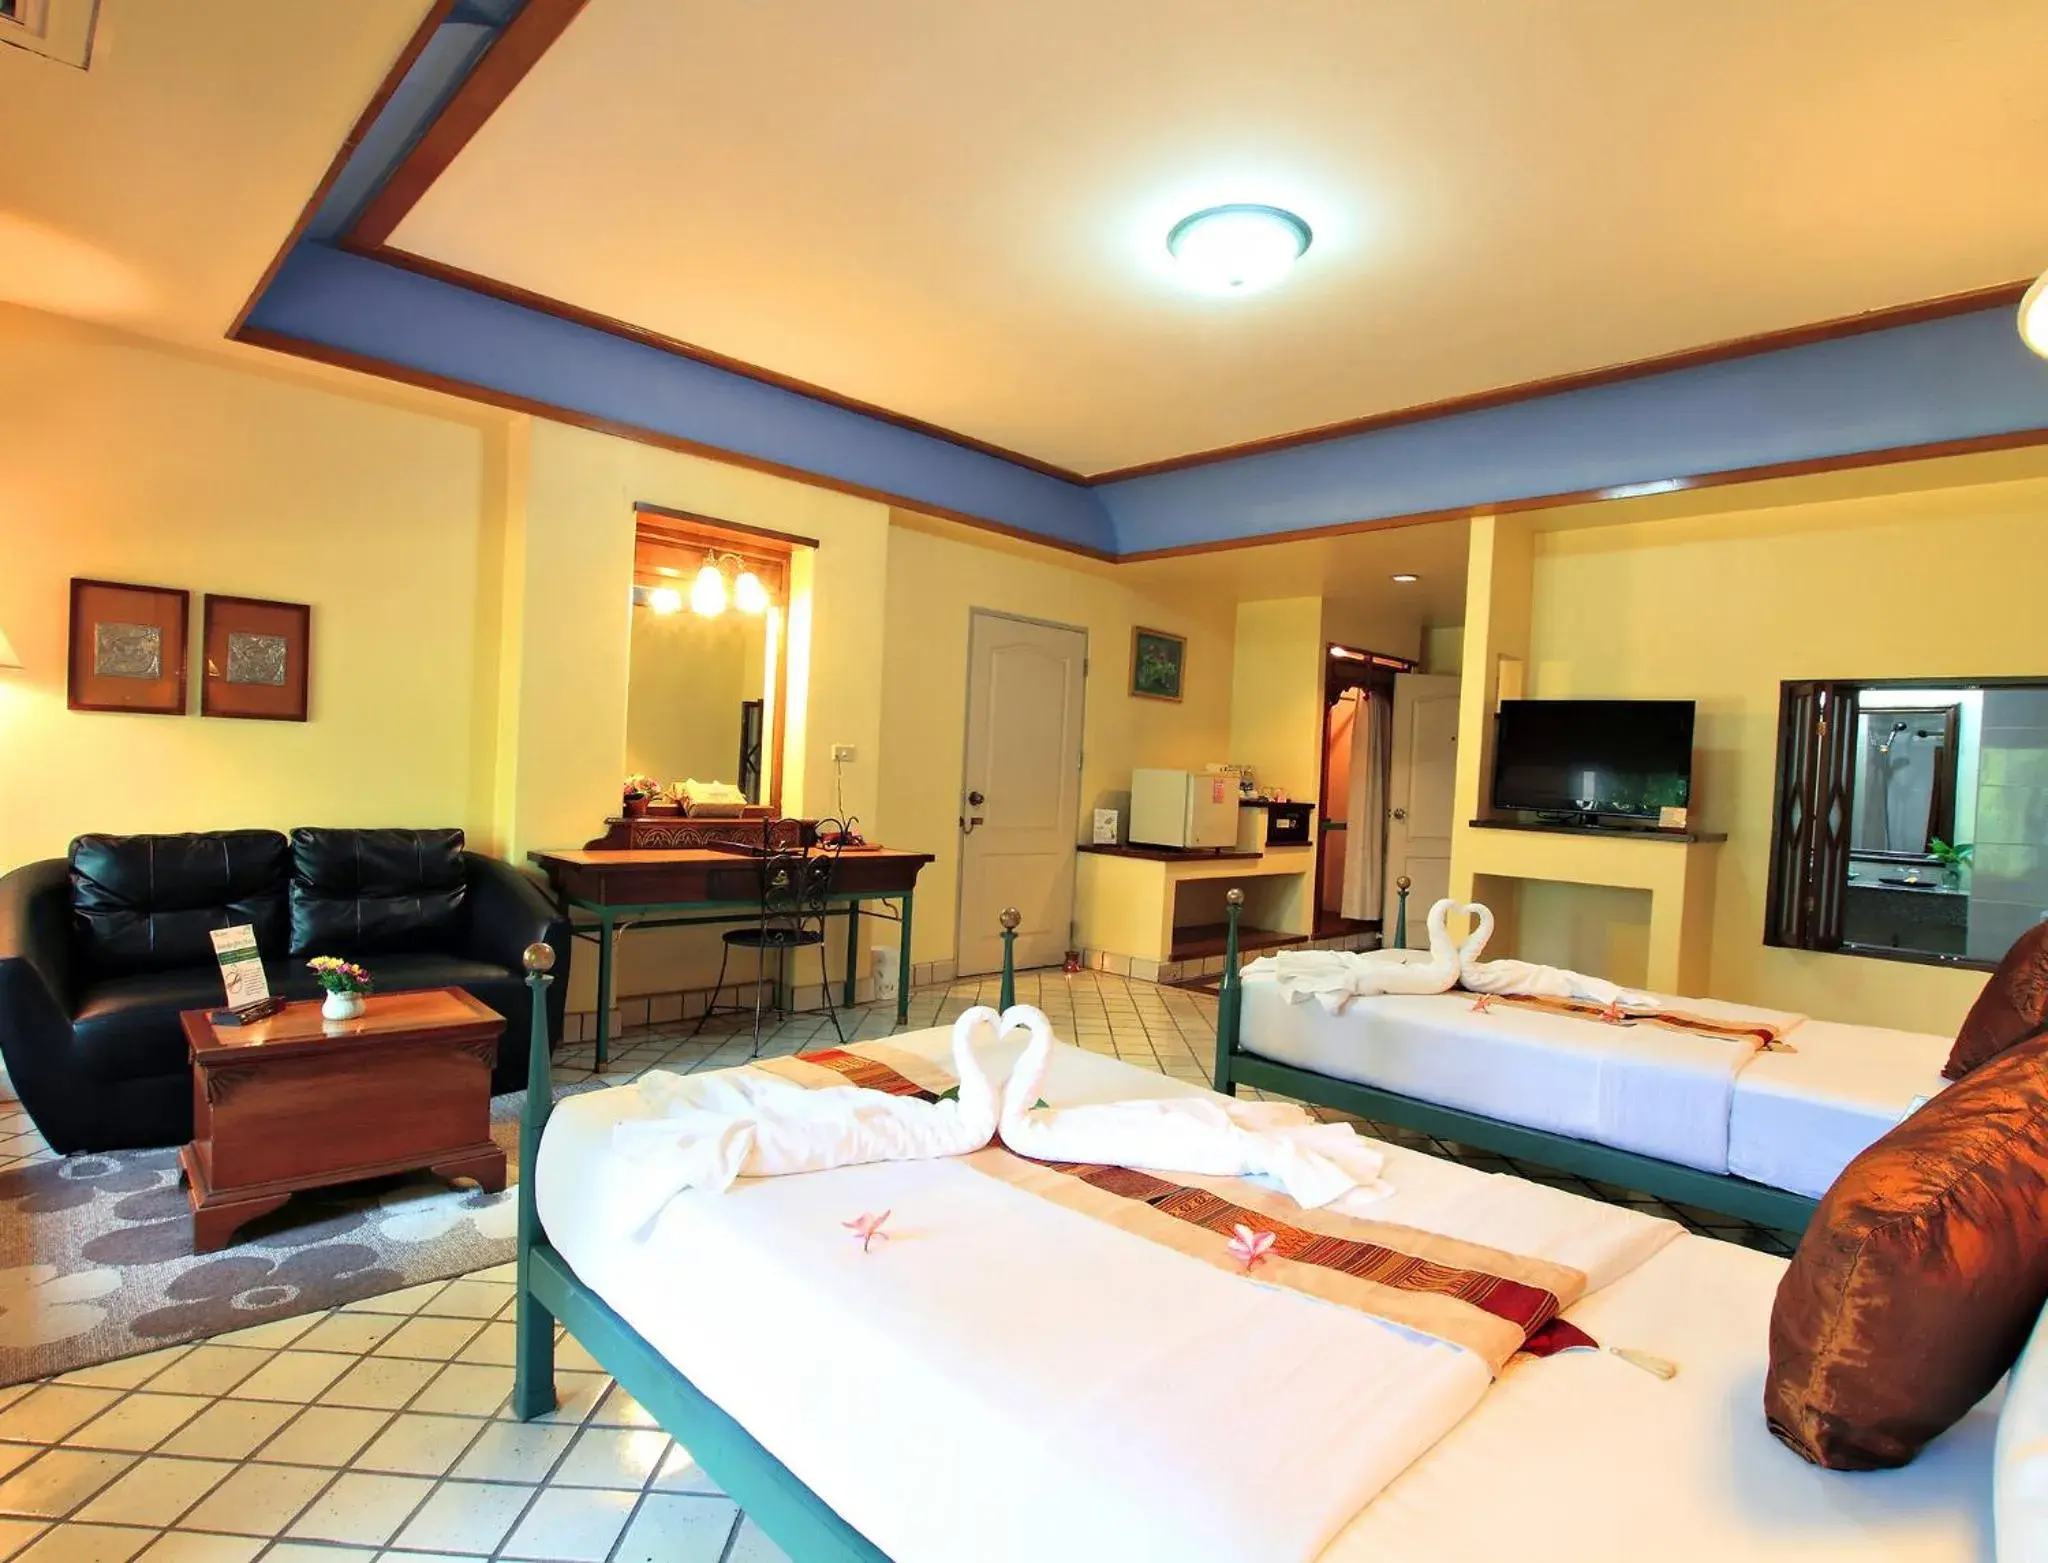 Bed in Pung-waan Resort & Spa